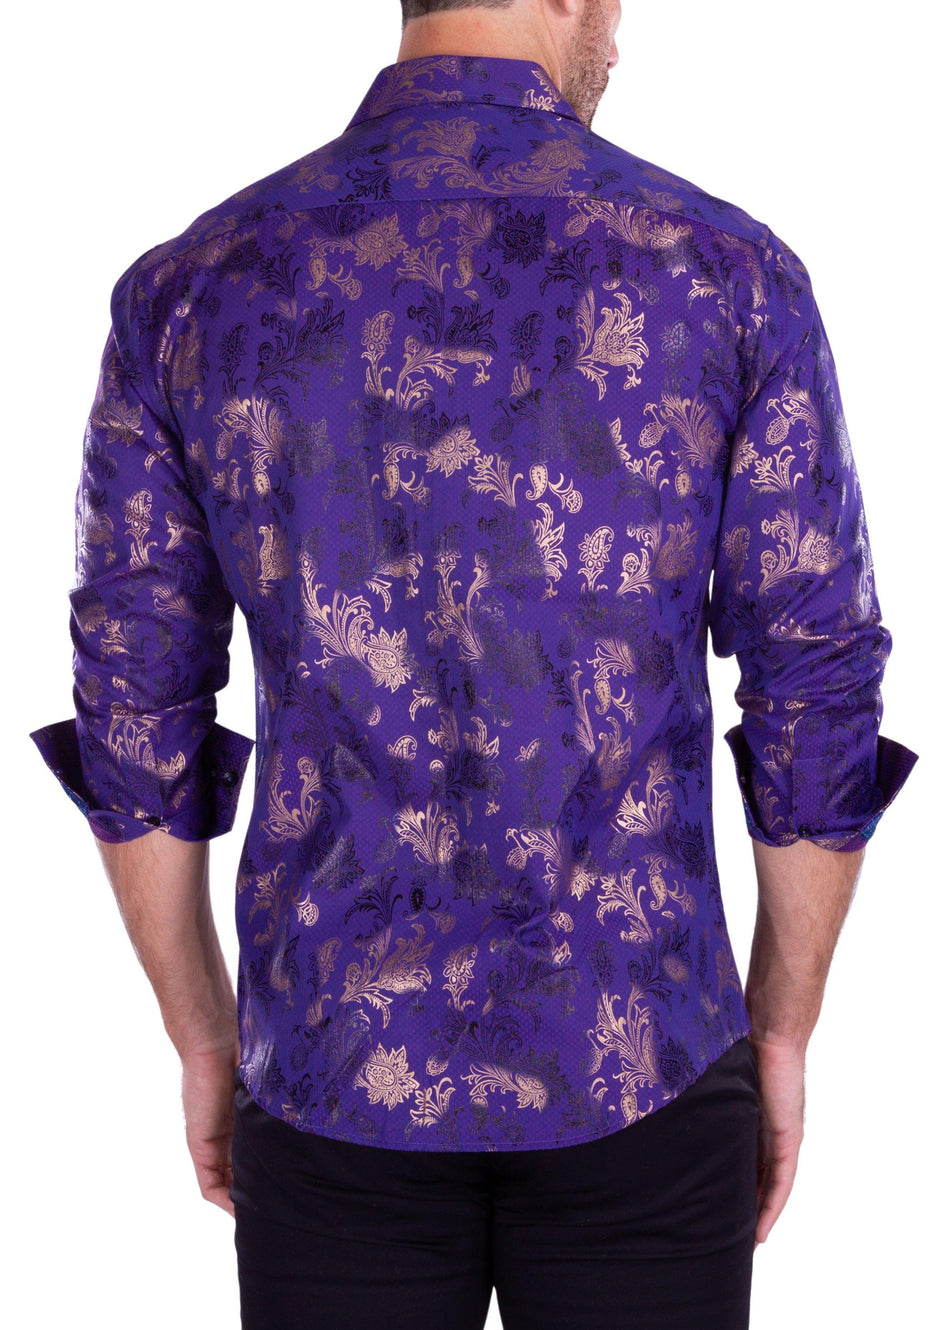 Metallic Flourish Accent On Microprint Long Sleeve Dress Shirt Purple